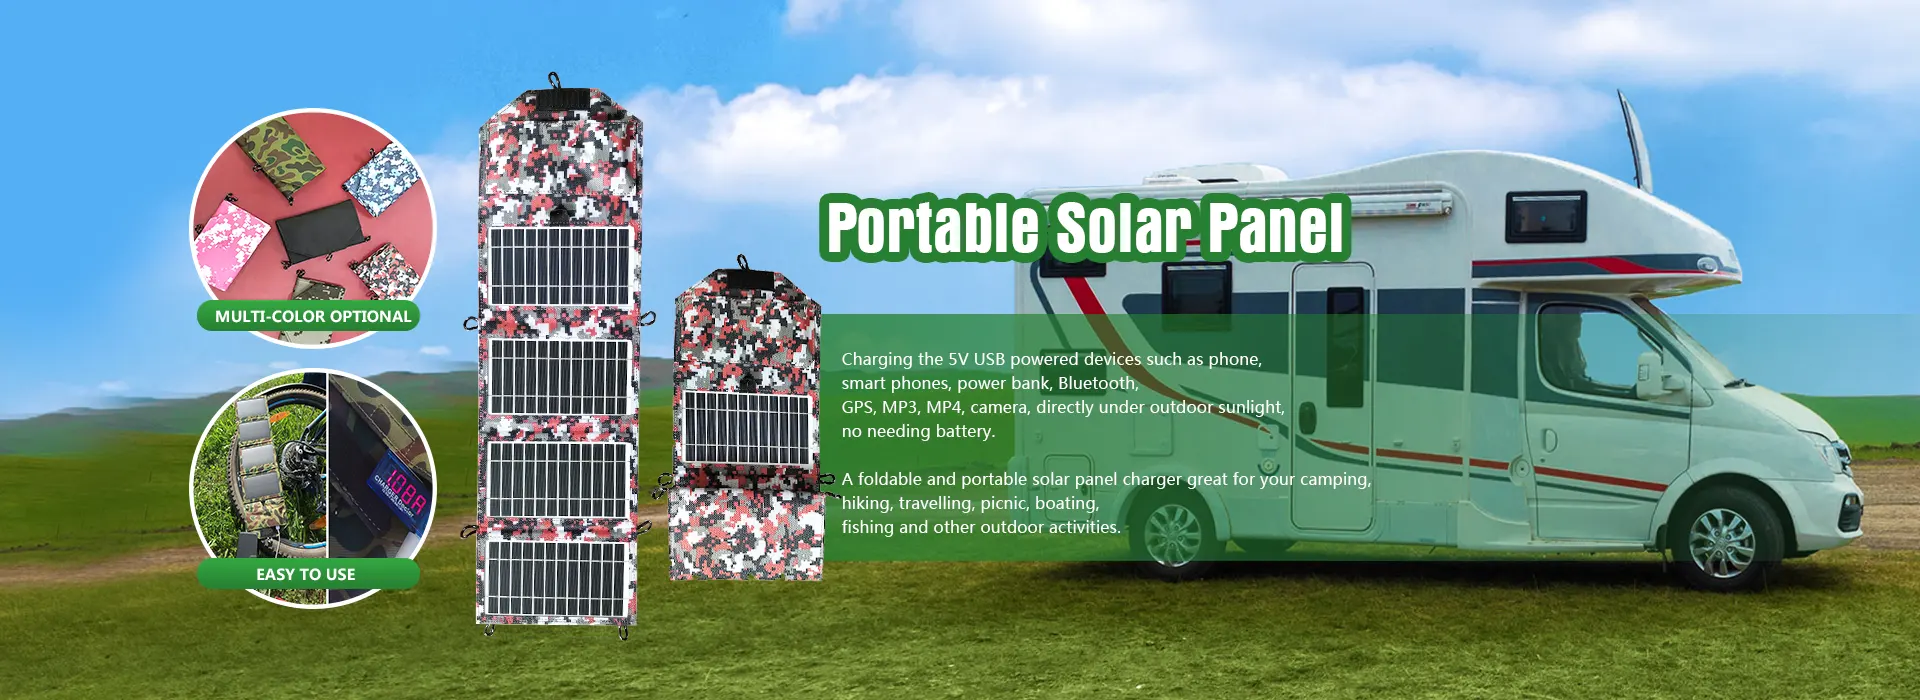 Portable Solar Panel Manufacturers